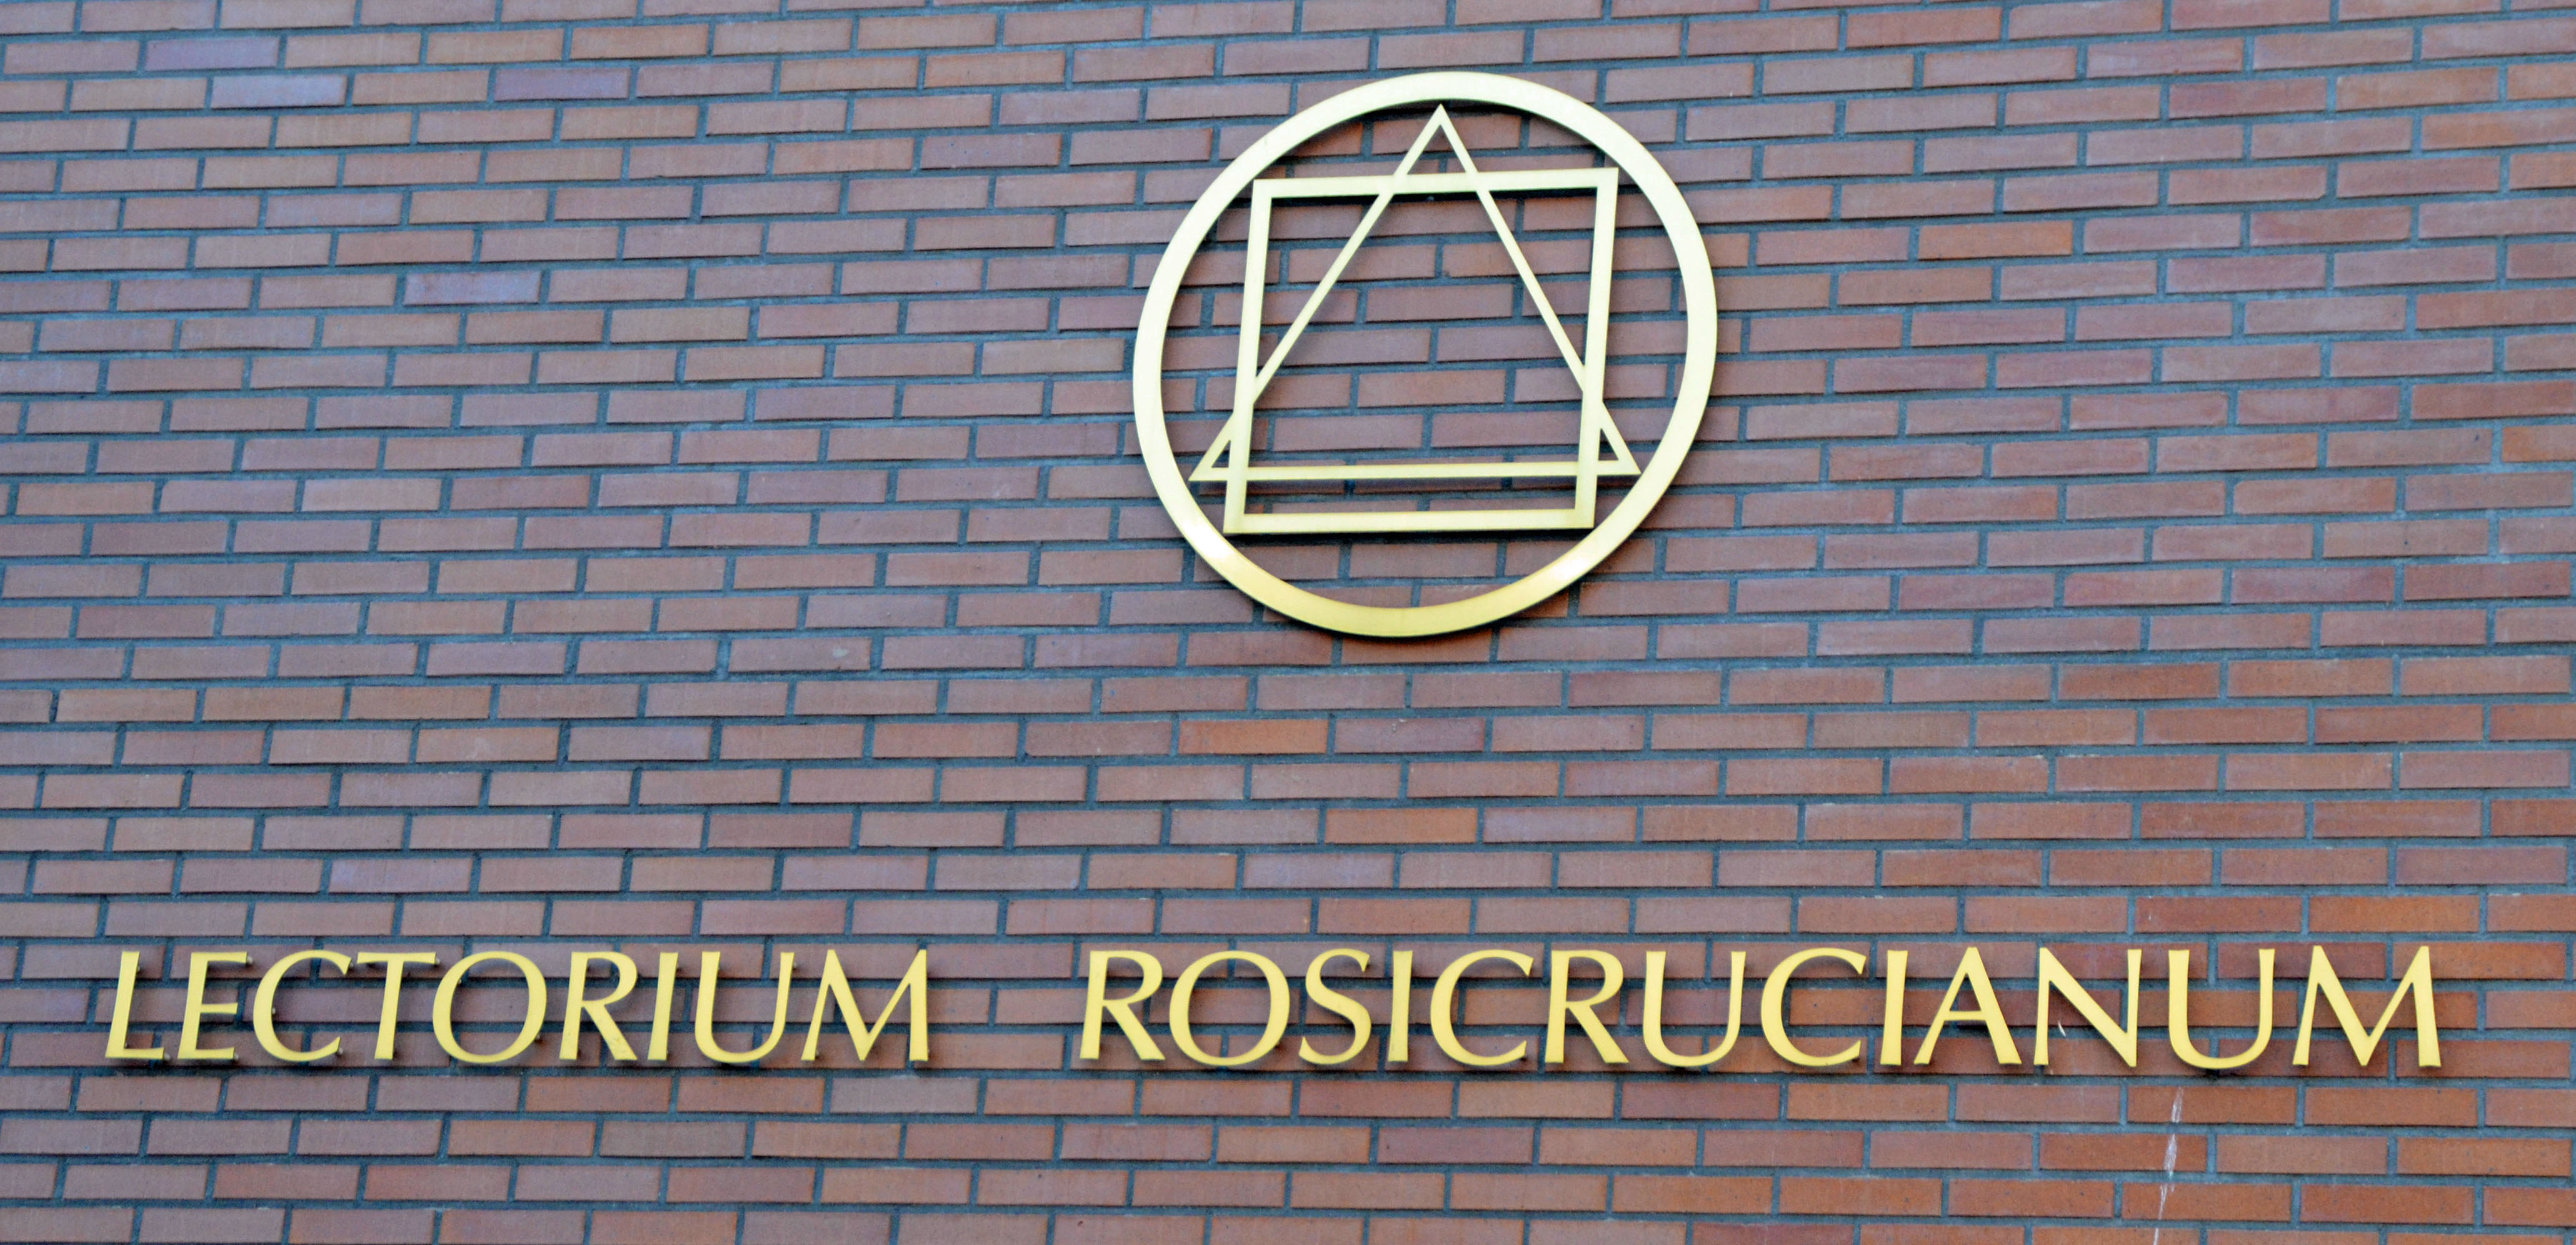 Rosicrucian Society